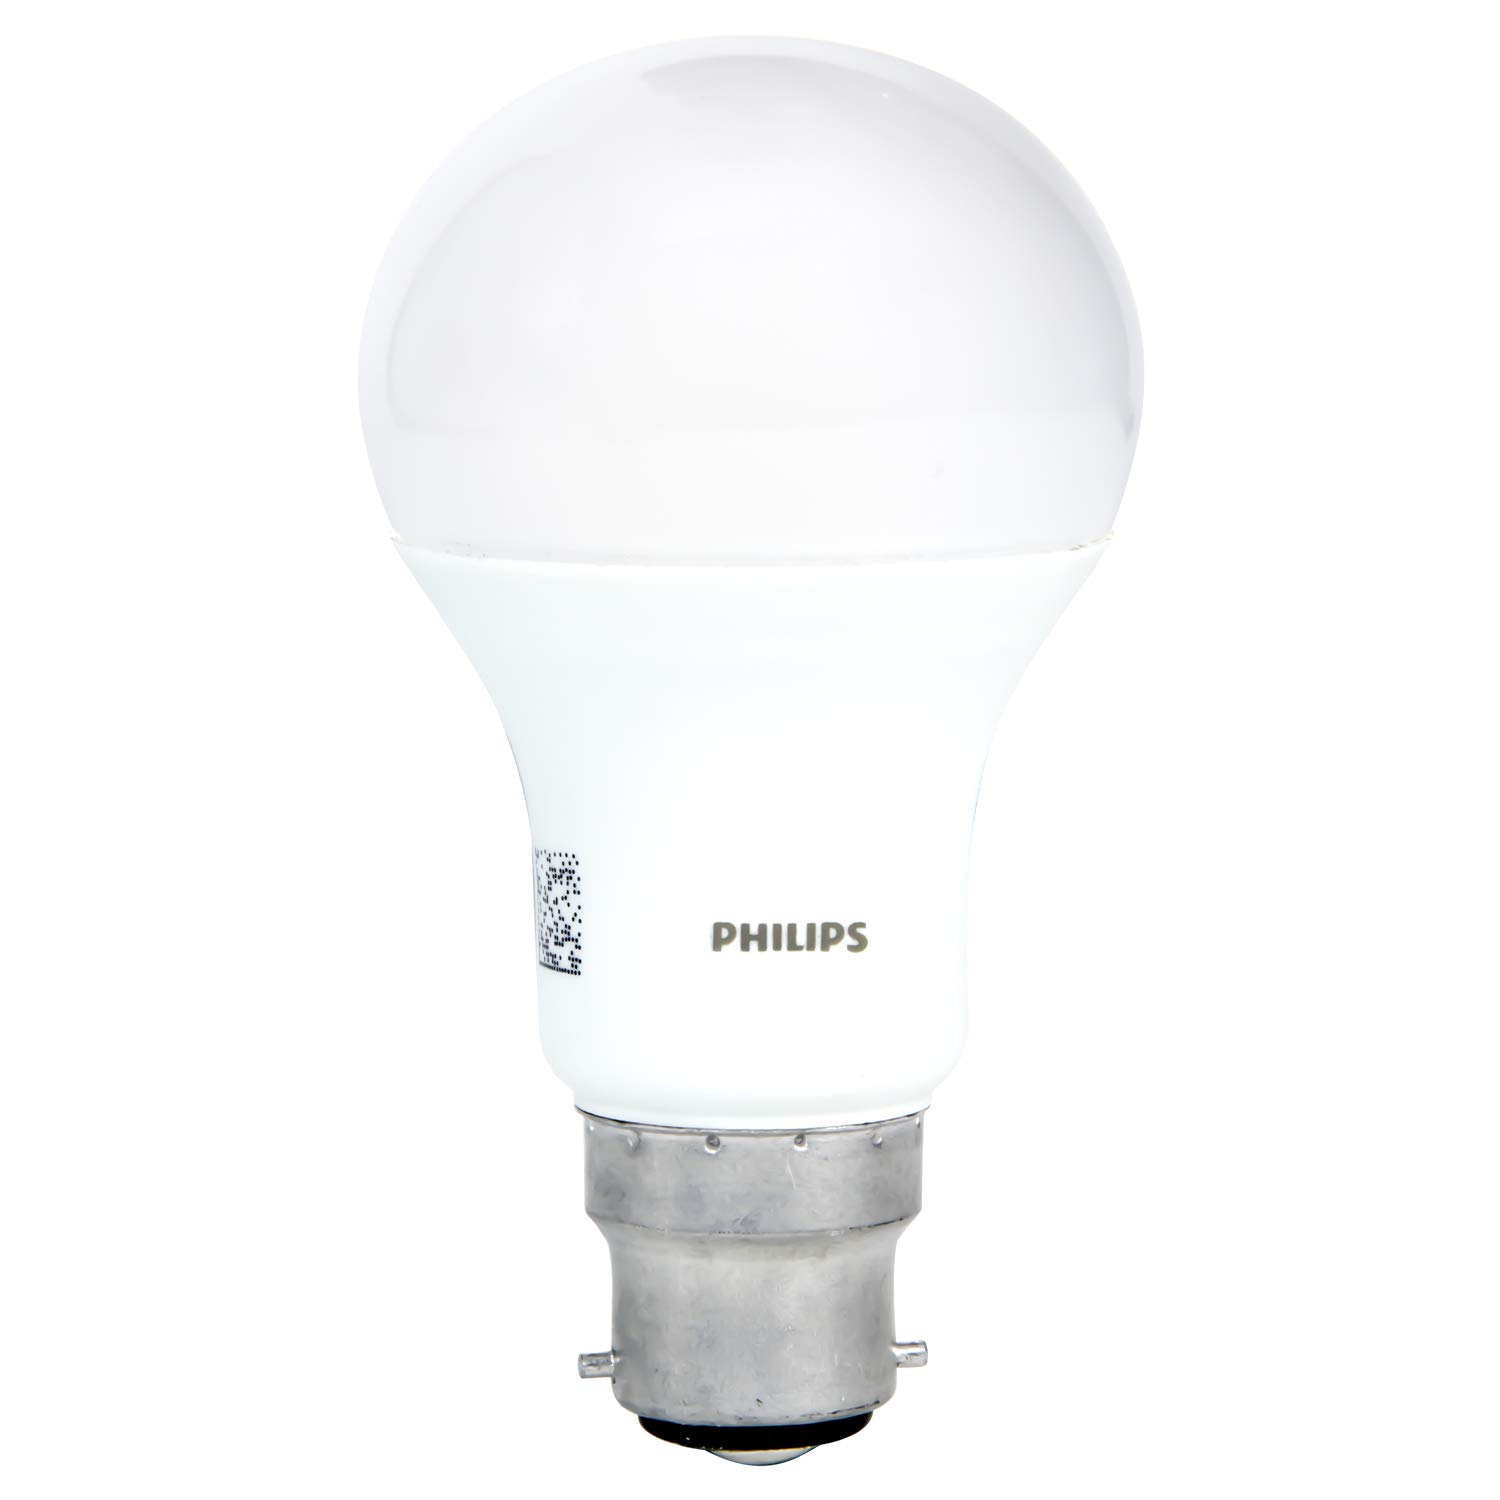 PHILIPS - LAMP 12W CDL B22